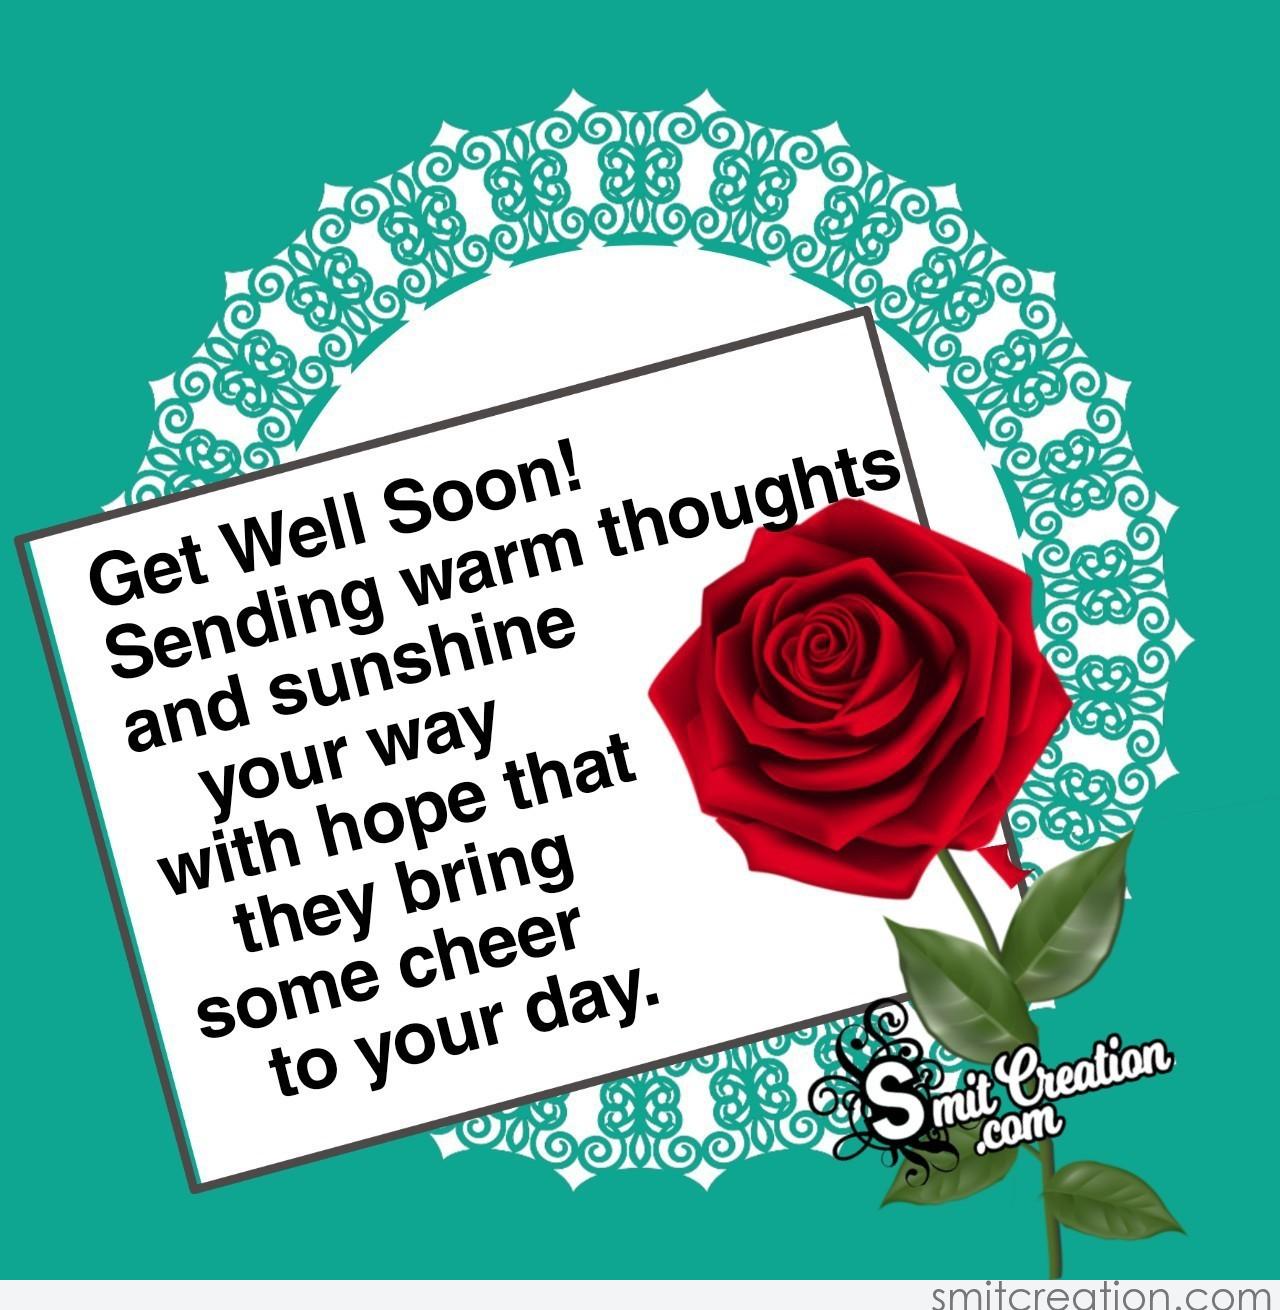 Sending Get Well Soon Message - SmitCreation.com